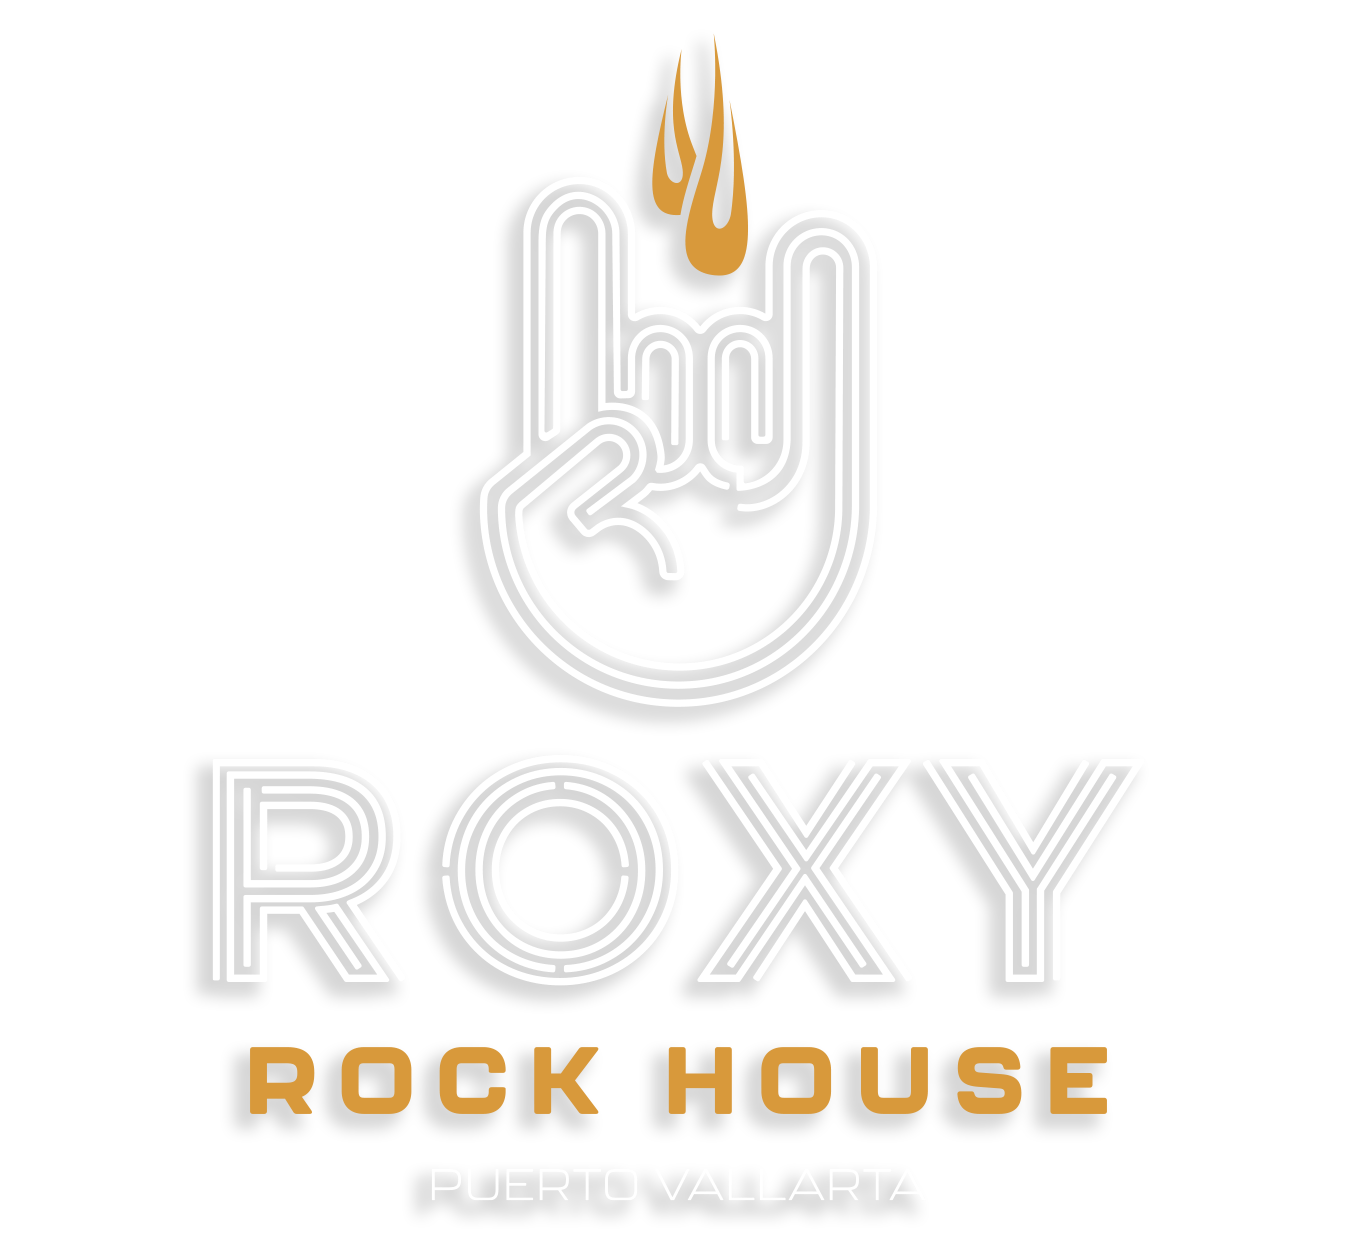 Roxy Rock House Puerto Vallarta, Jalisco México